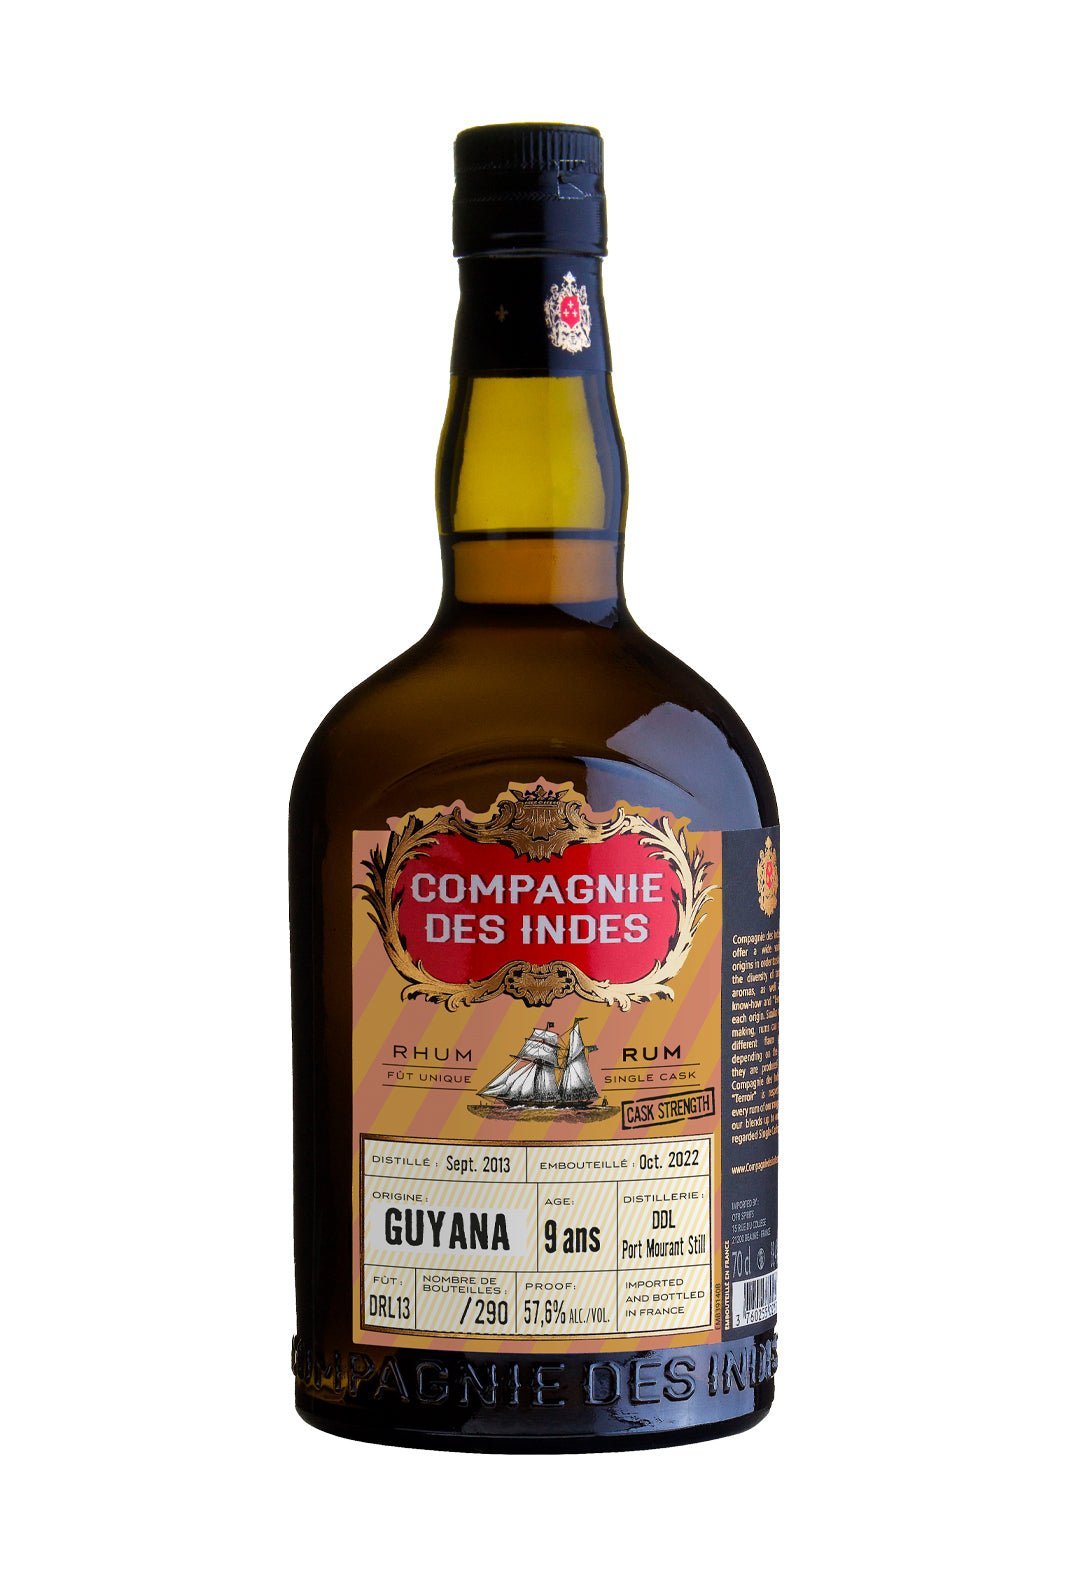 Compagnie des Indes Guyana 9 years Rum 57.6% 700ml | Rum | Shop online at Spirits of France